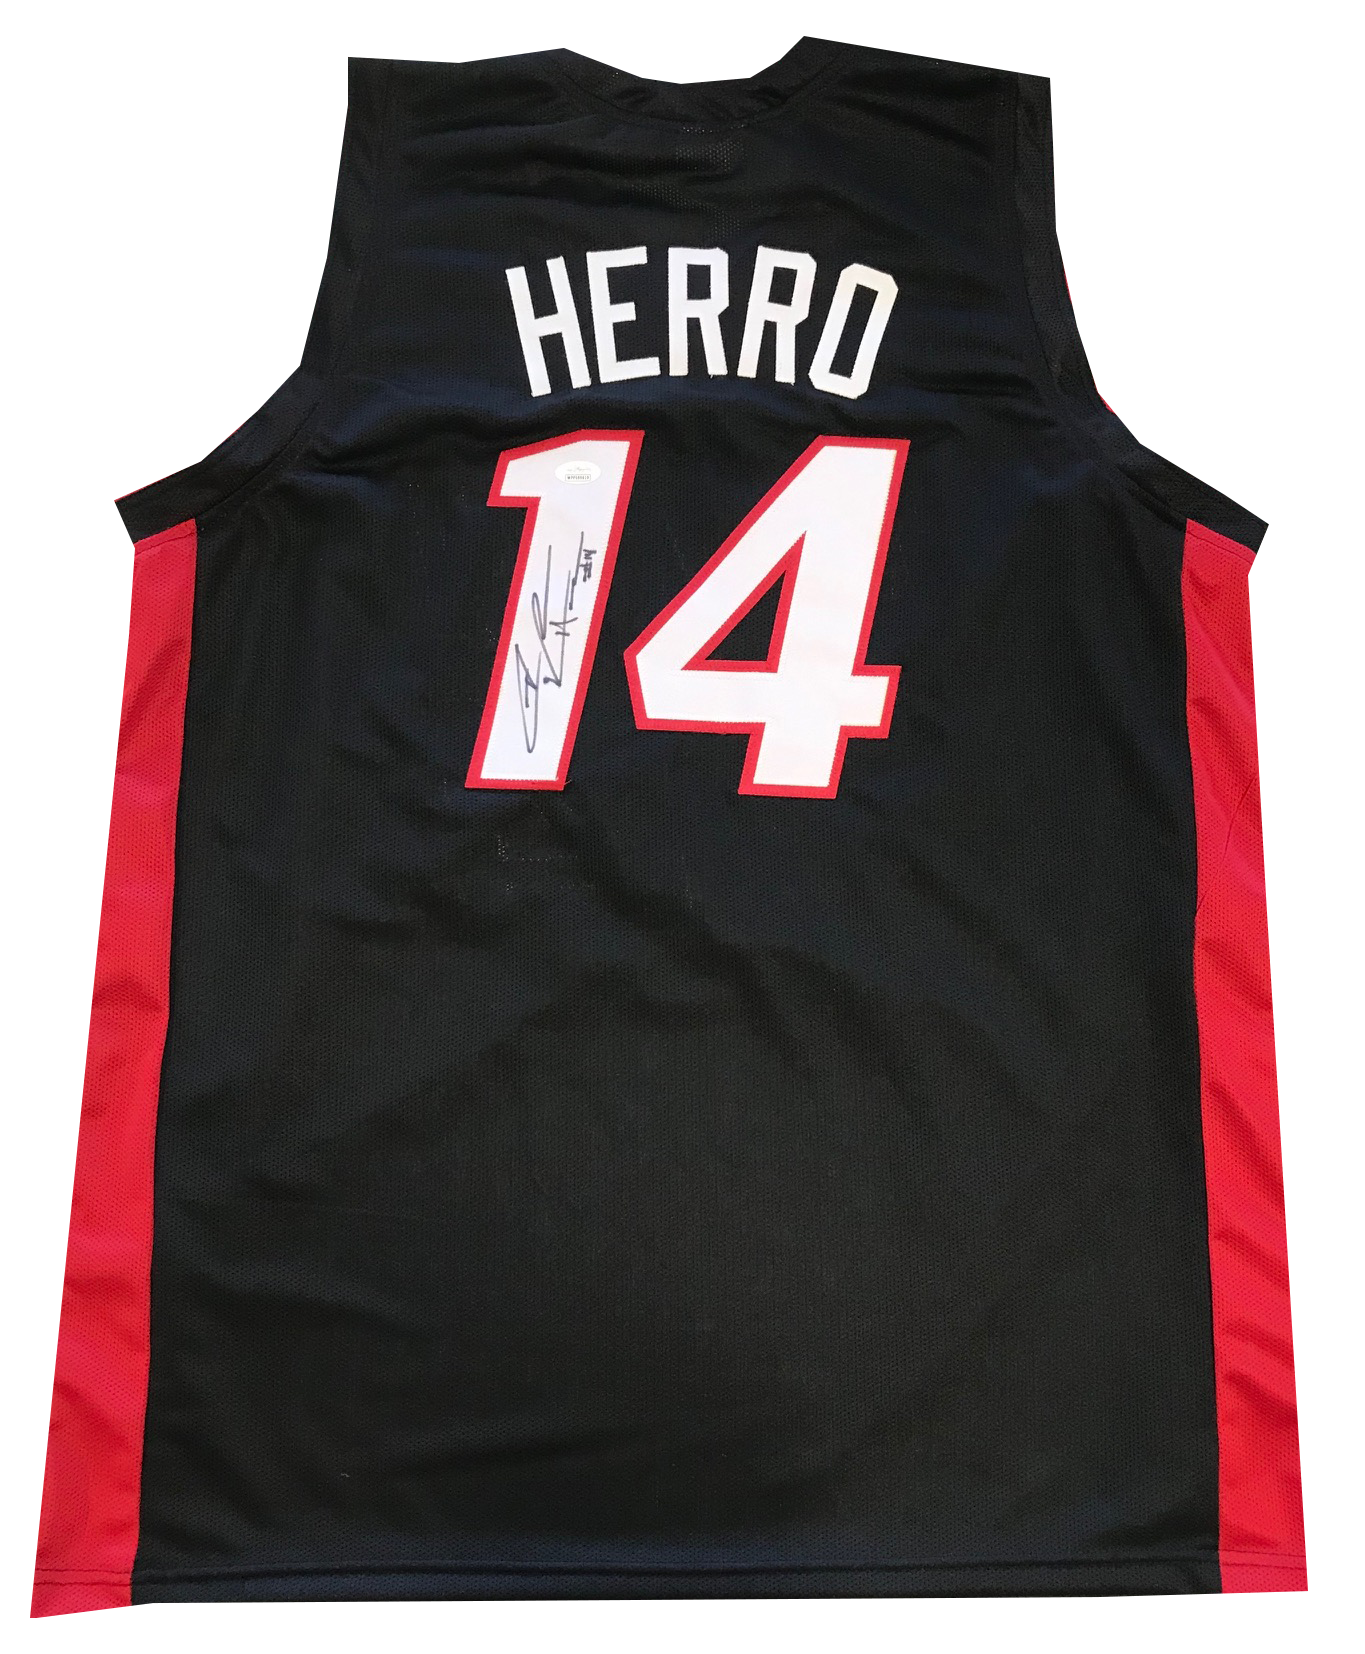 Tyler Herro Signed Black Maimi Heat Fanatics Basketball Jersey JSA